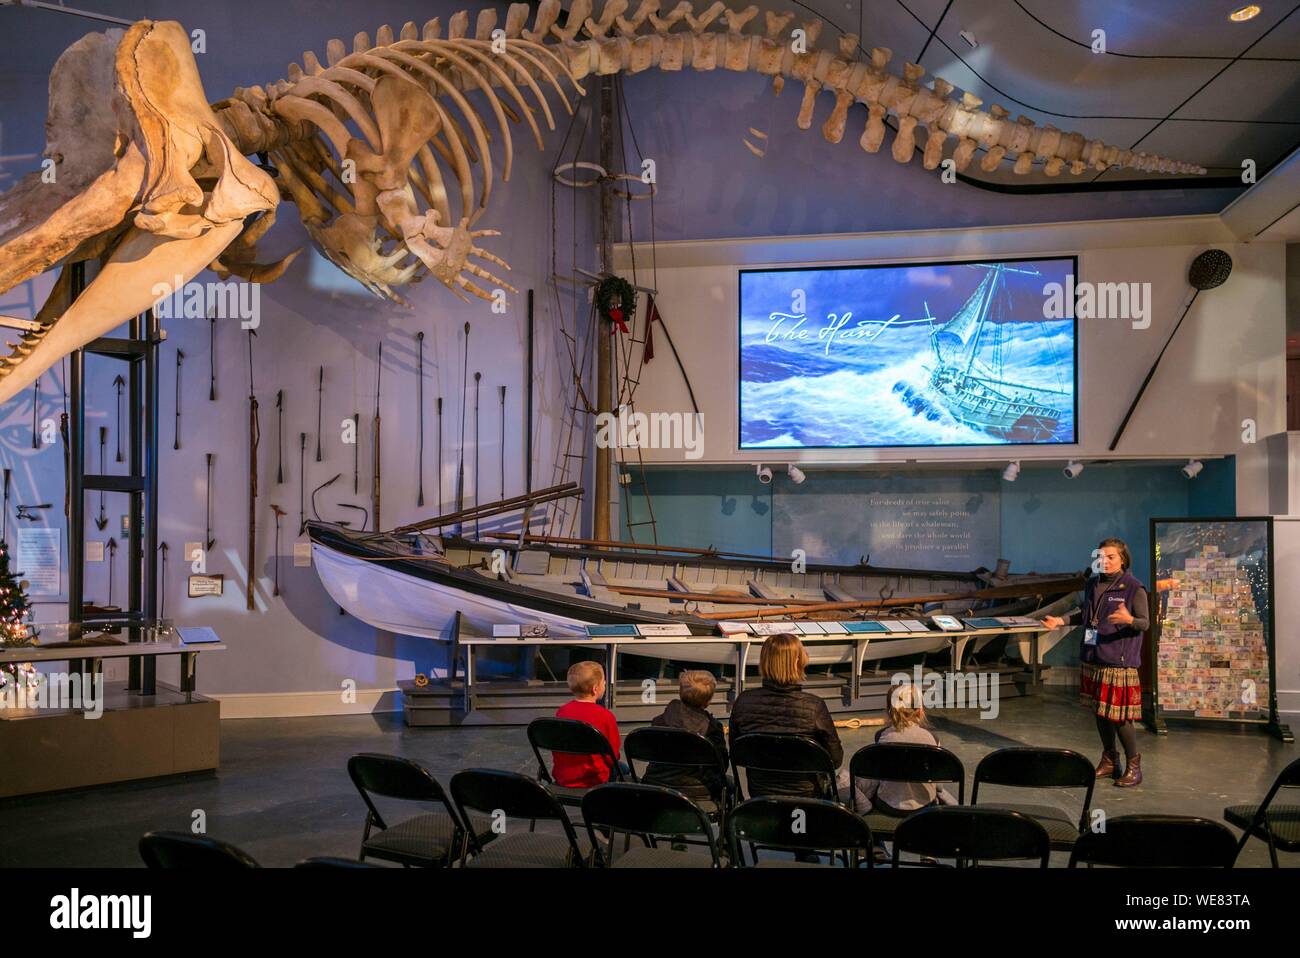 United States, New England, Massachusetts, Nantucket Island, Nantucket, Nantucket Whaling Museum, Wal Skelett und Walfang Präsentation Stockfoto